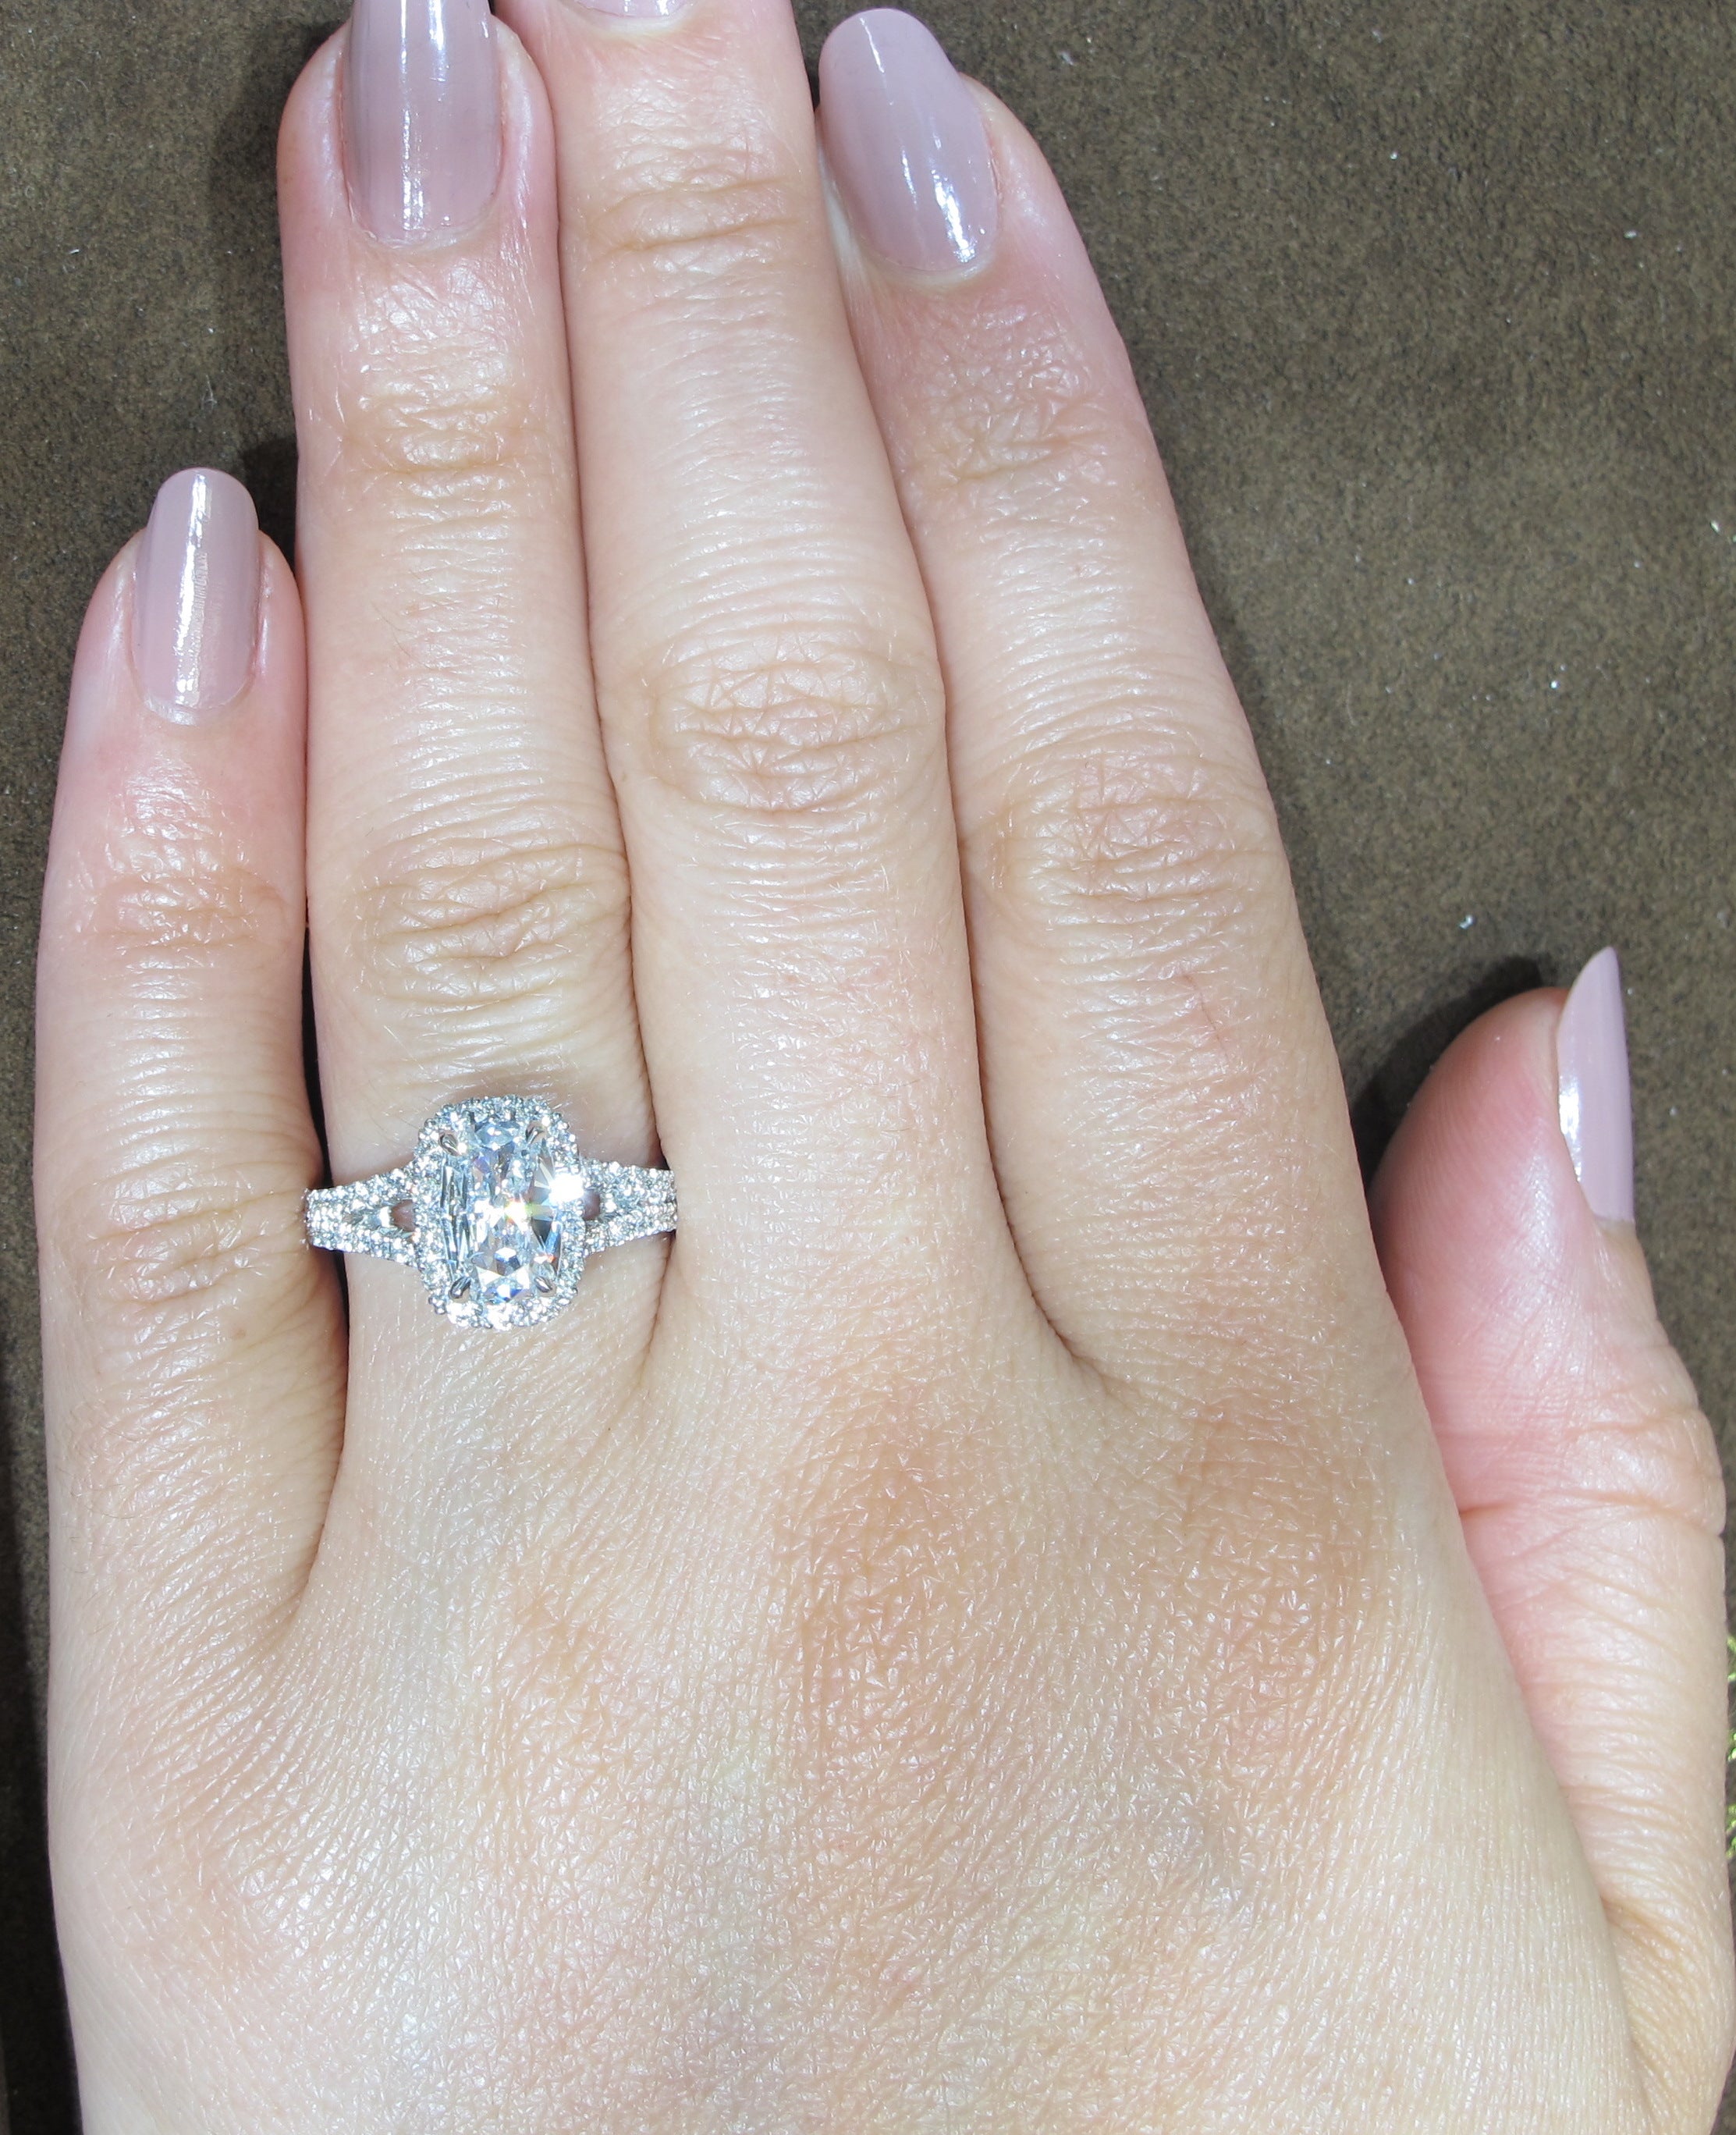 Henri Daussi Halo Set Cushion Cut Diamond Engagement Ring Totalling 1.99cts GIA Certified Center 1.23cts